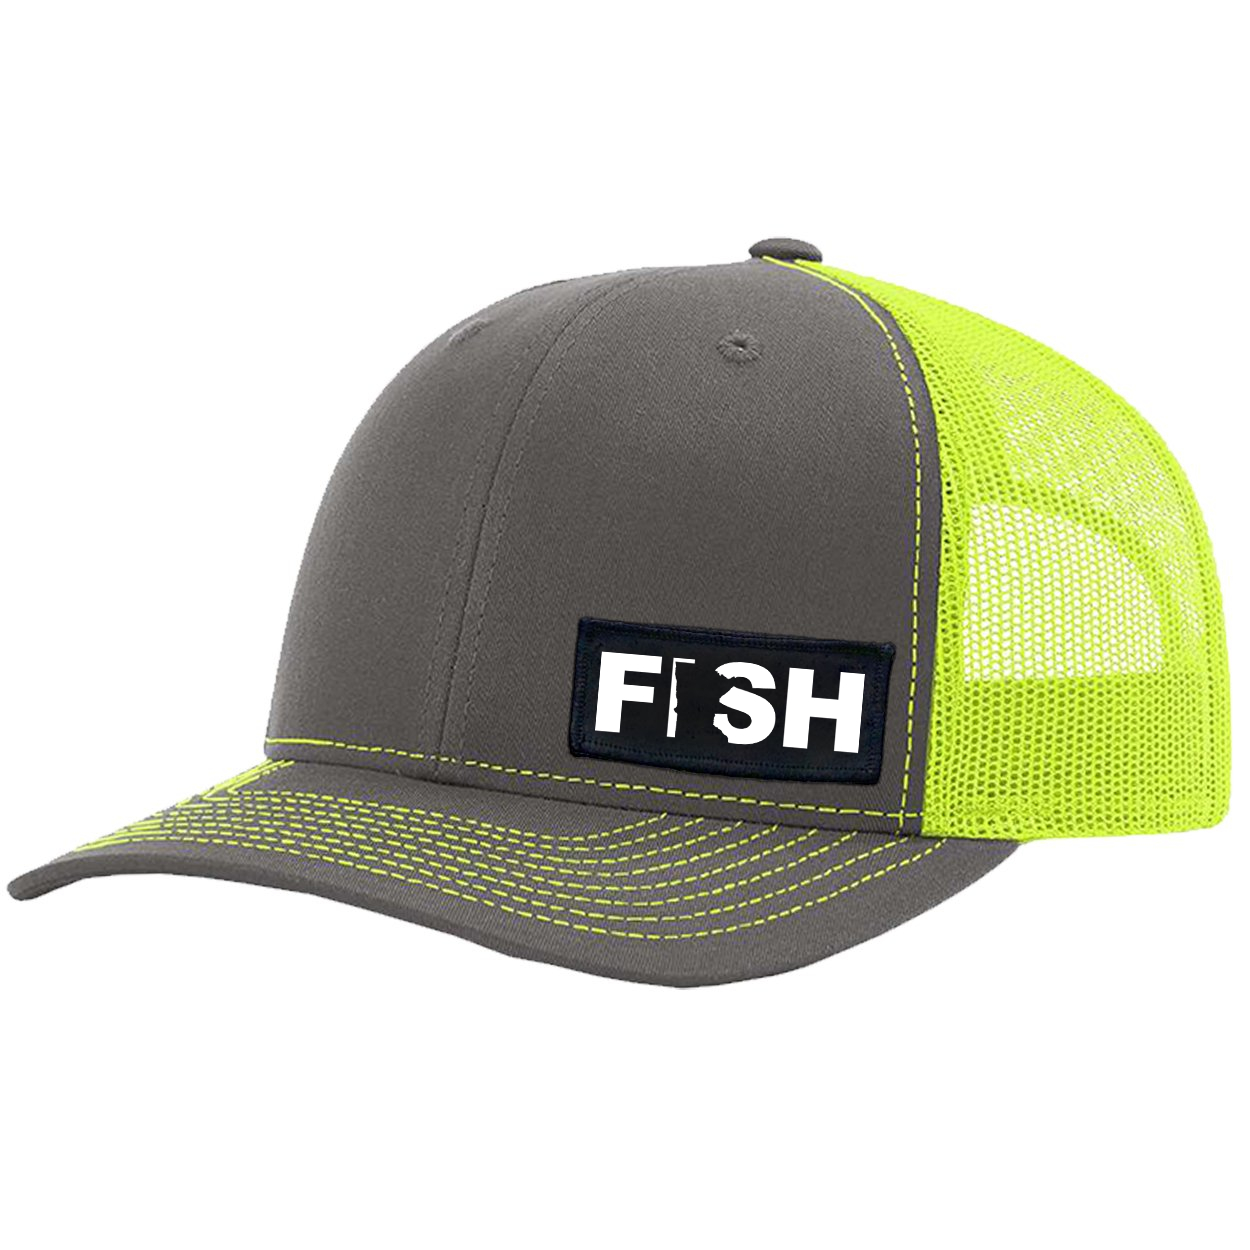 Fish Minnesota Night Out Woven Patch Snapback Trucker Hat Gray/Neon Yellow (White Logo)